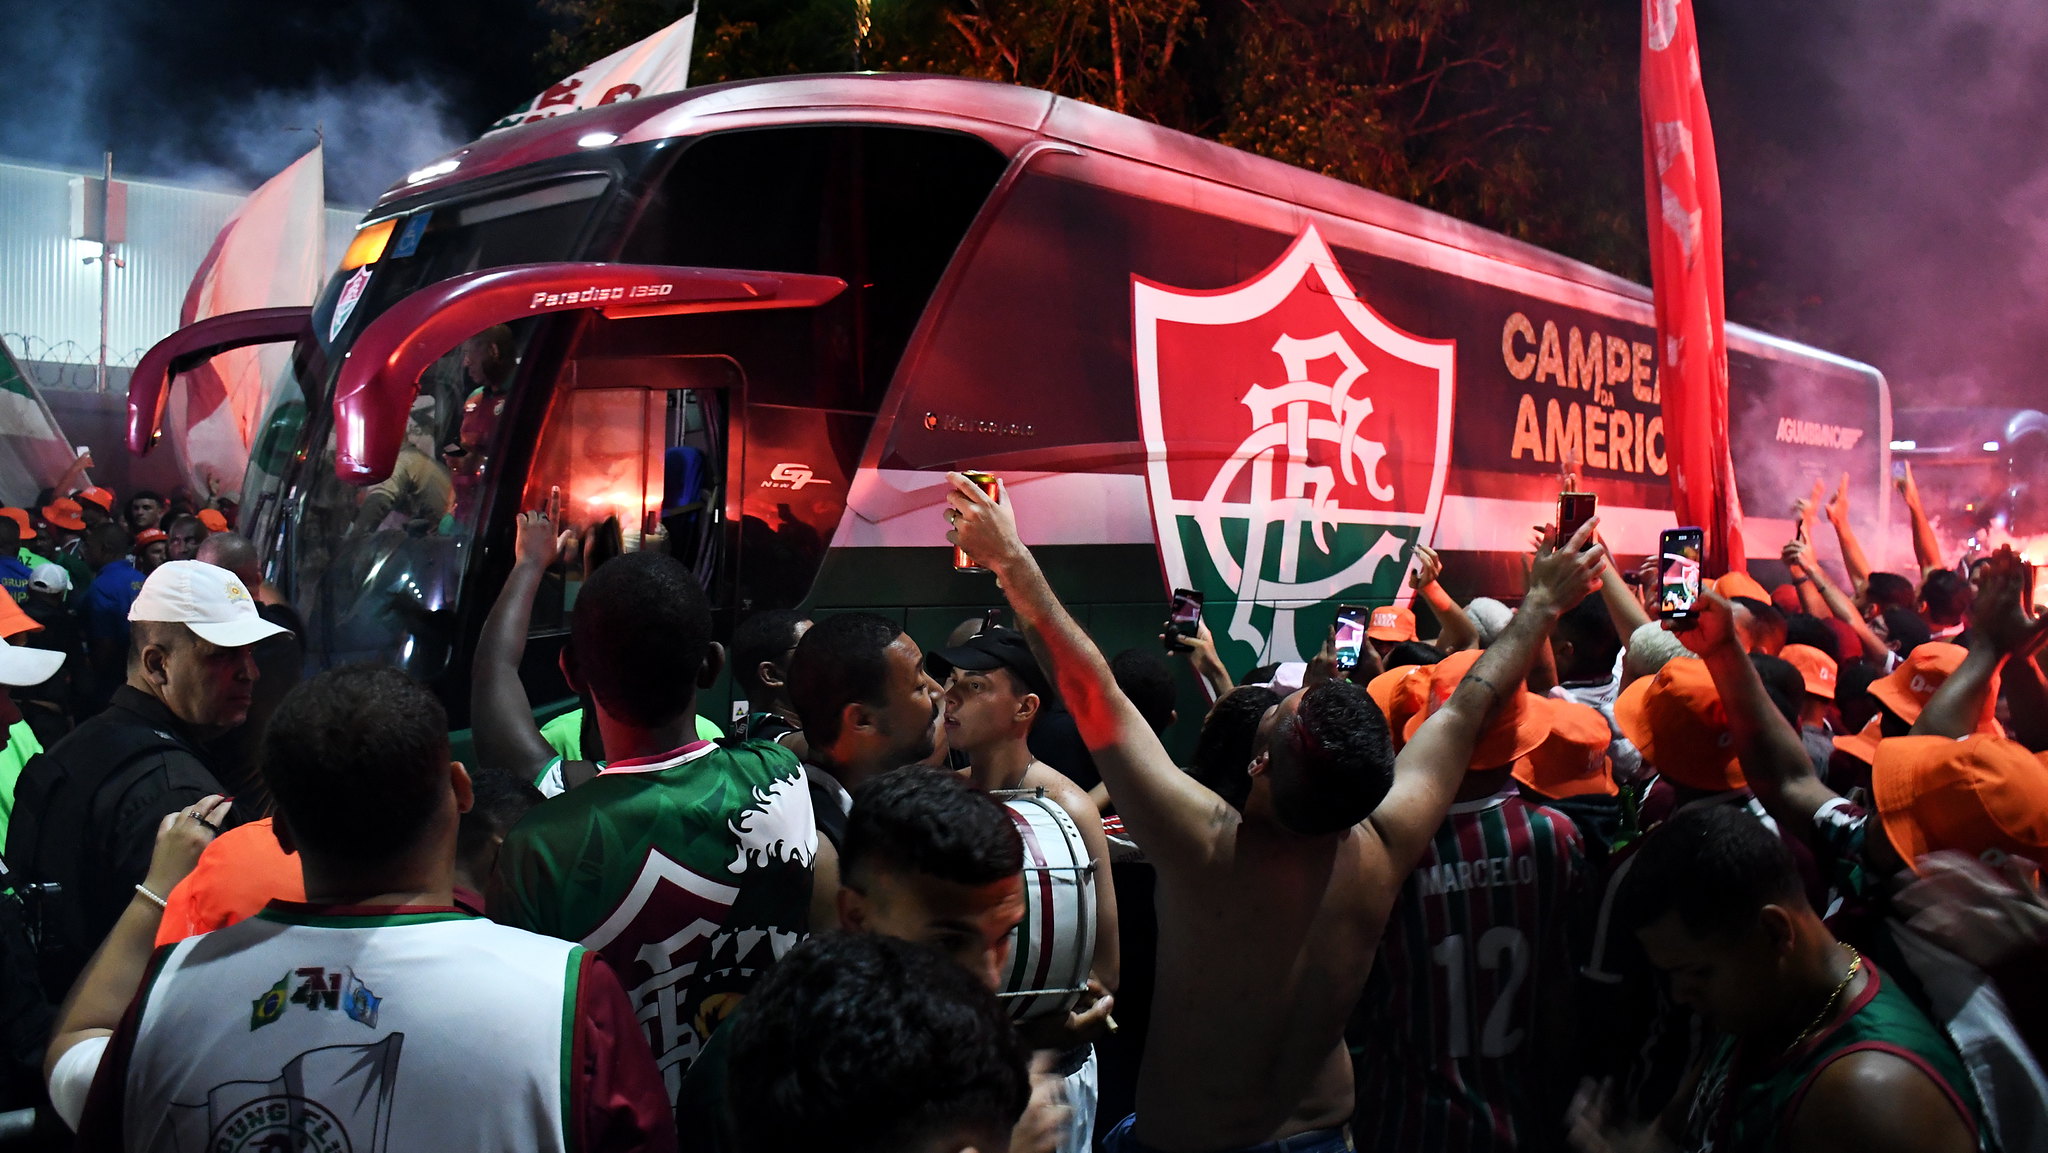 Fluminense embarca para Arábia Saudita (Foto: Mailson Santana/Fluminense)